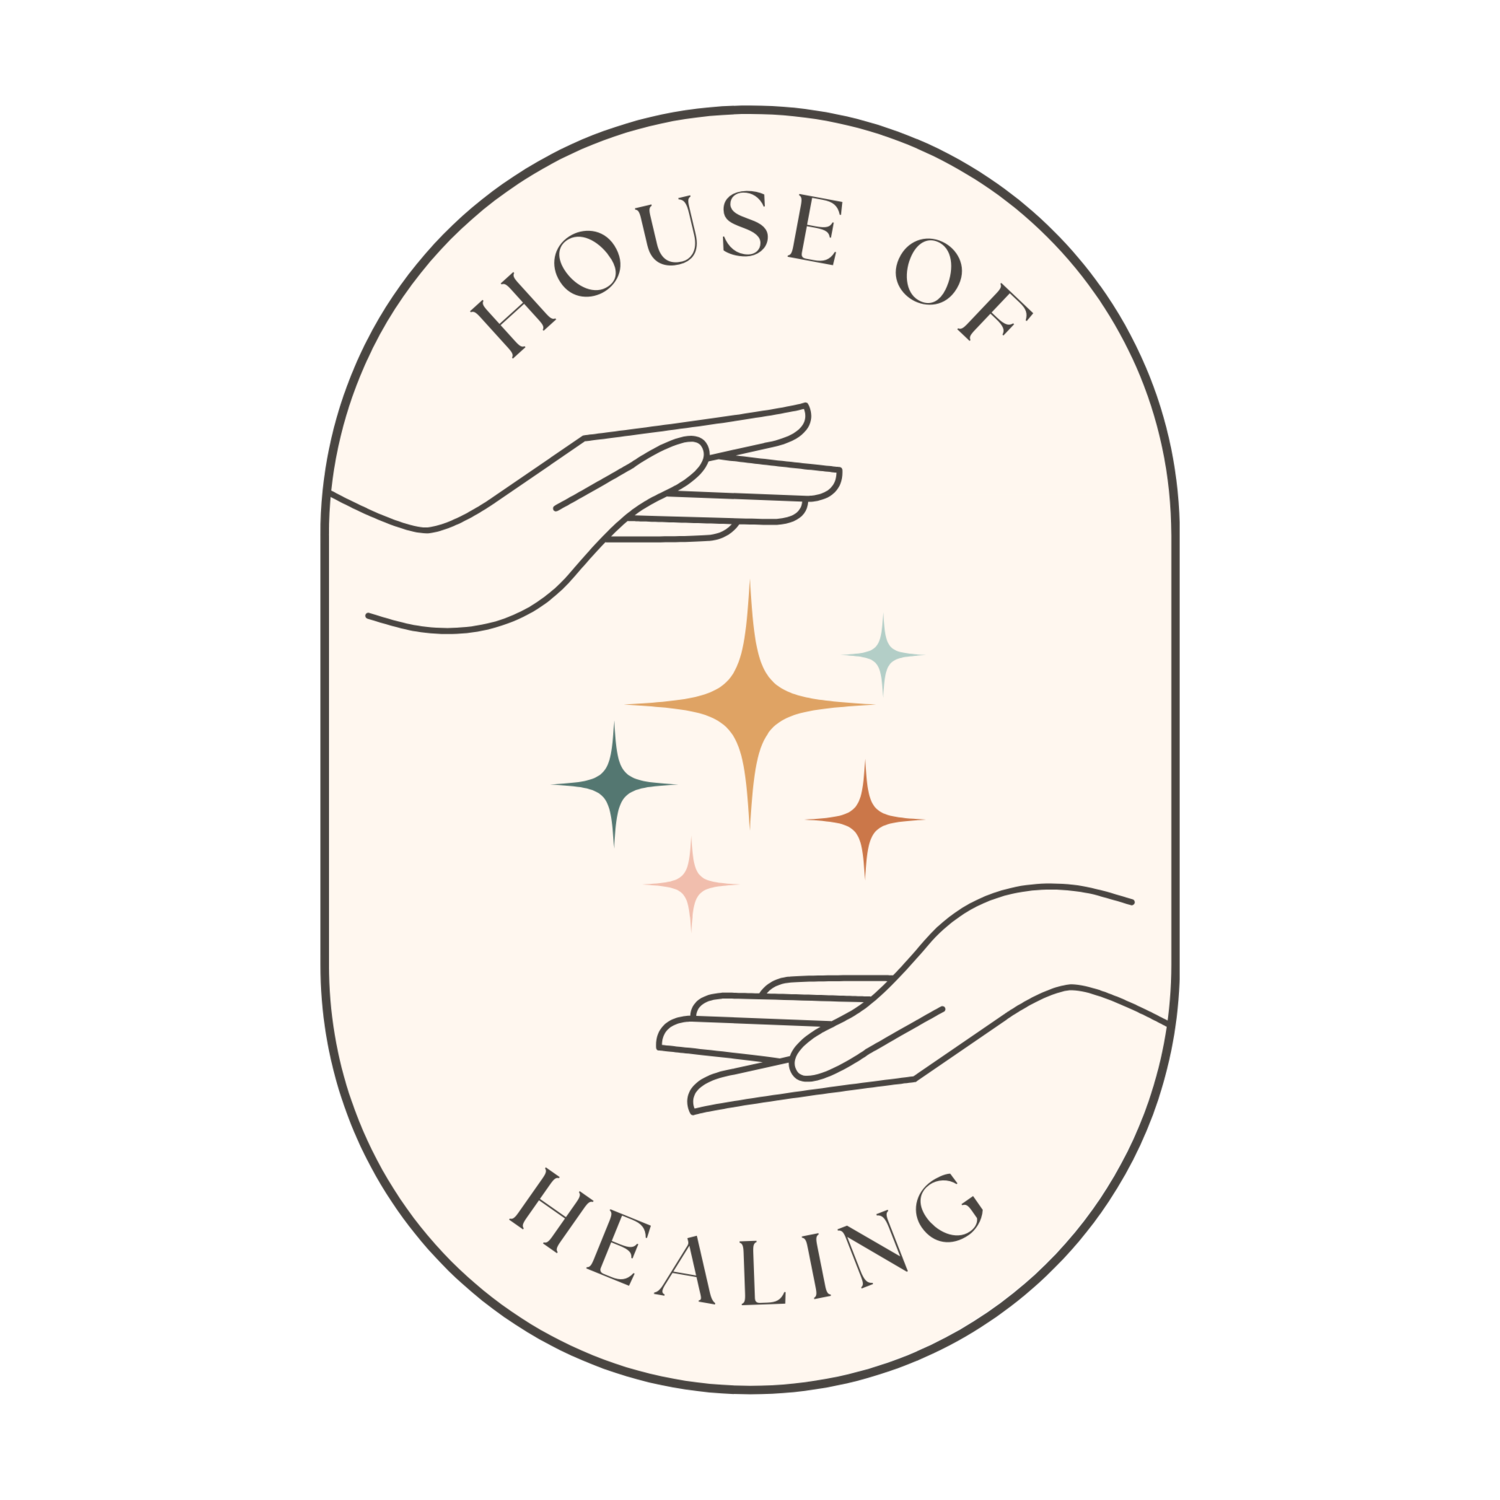 House of Healing